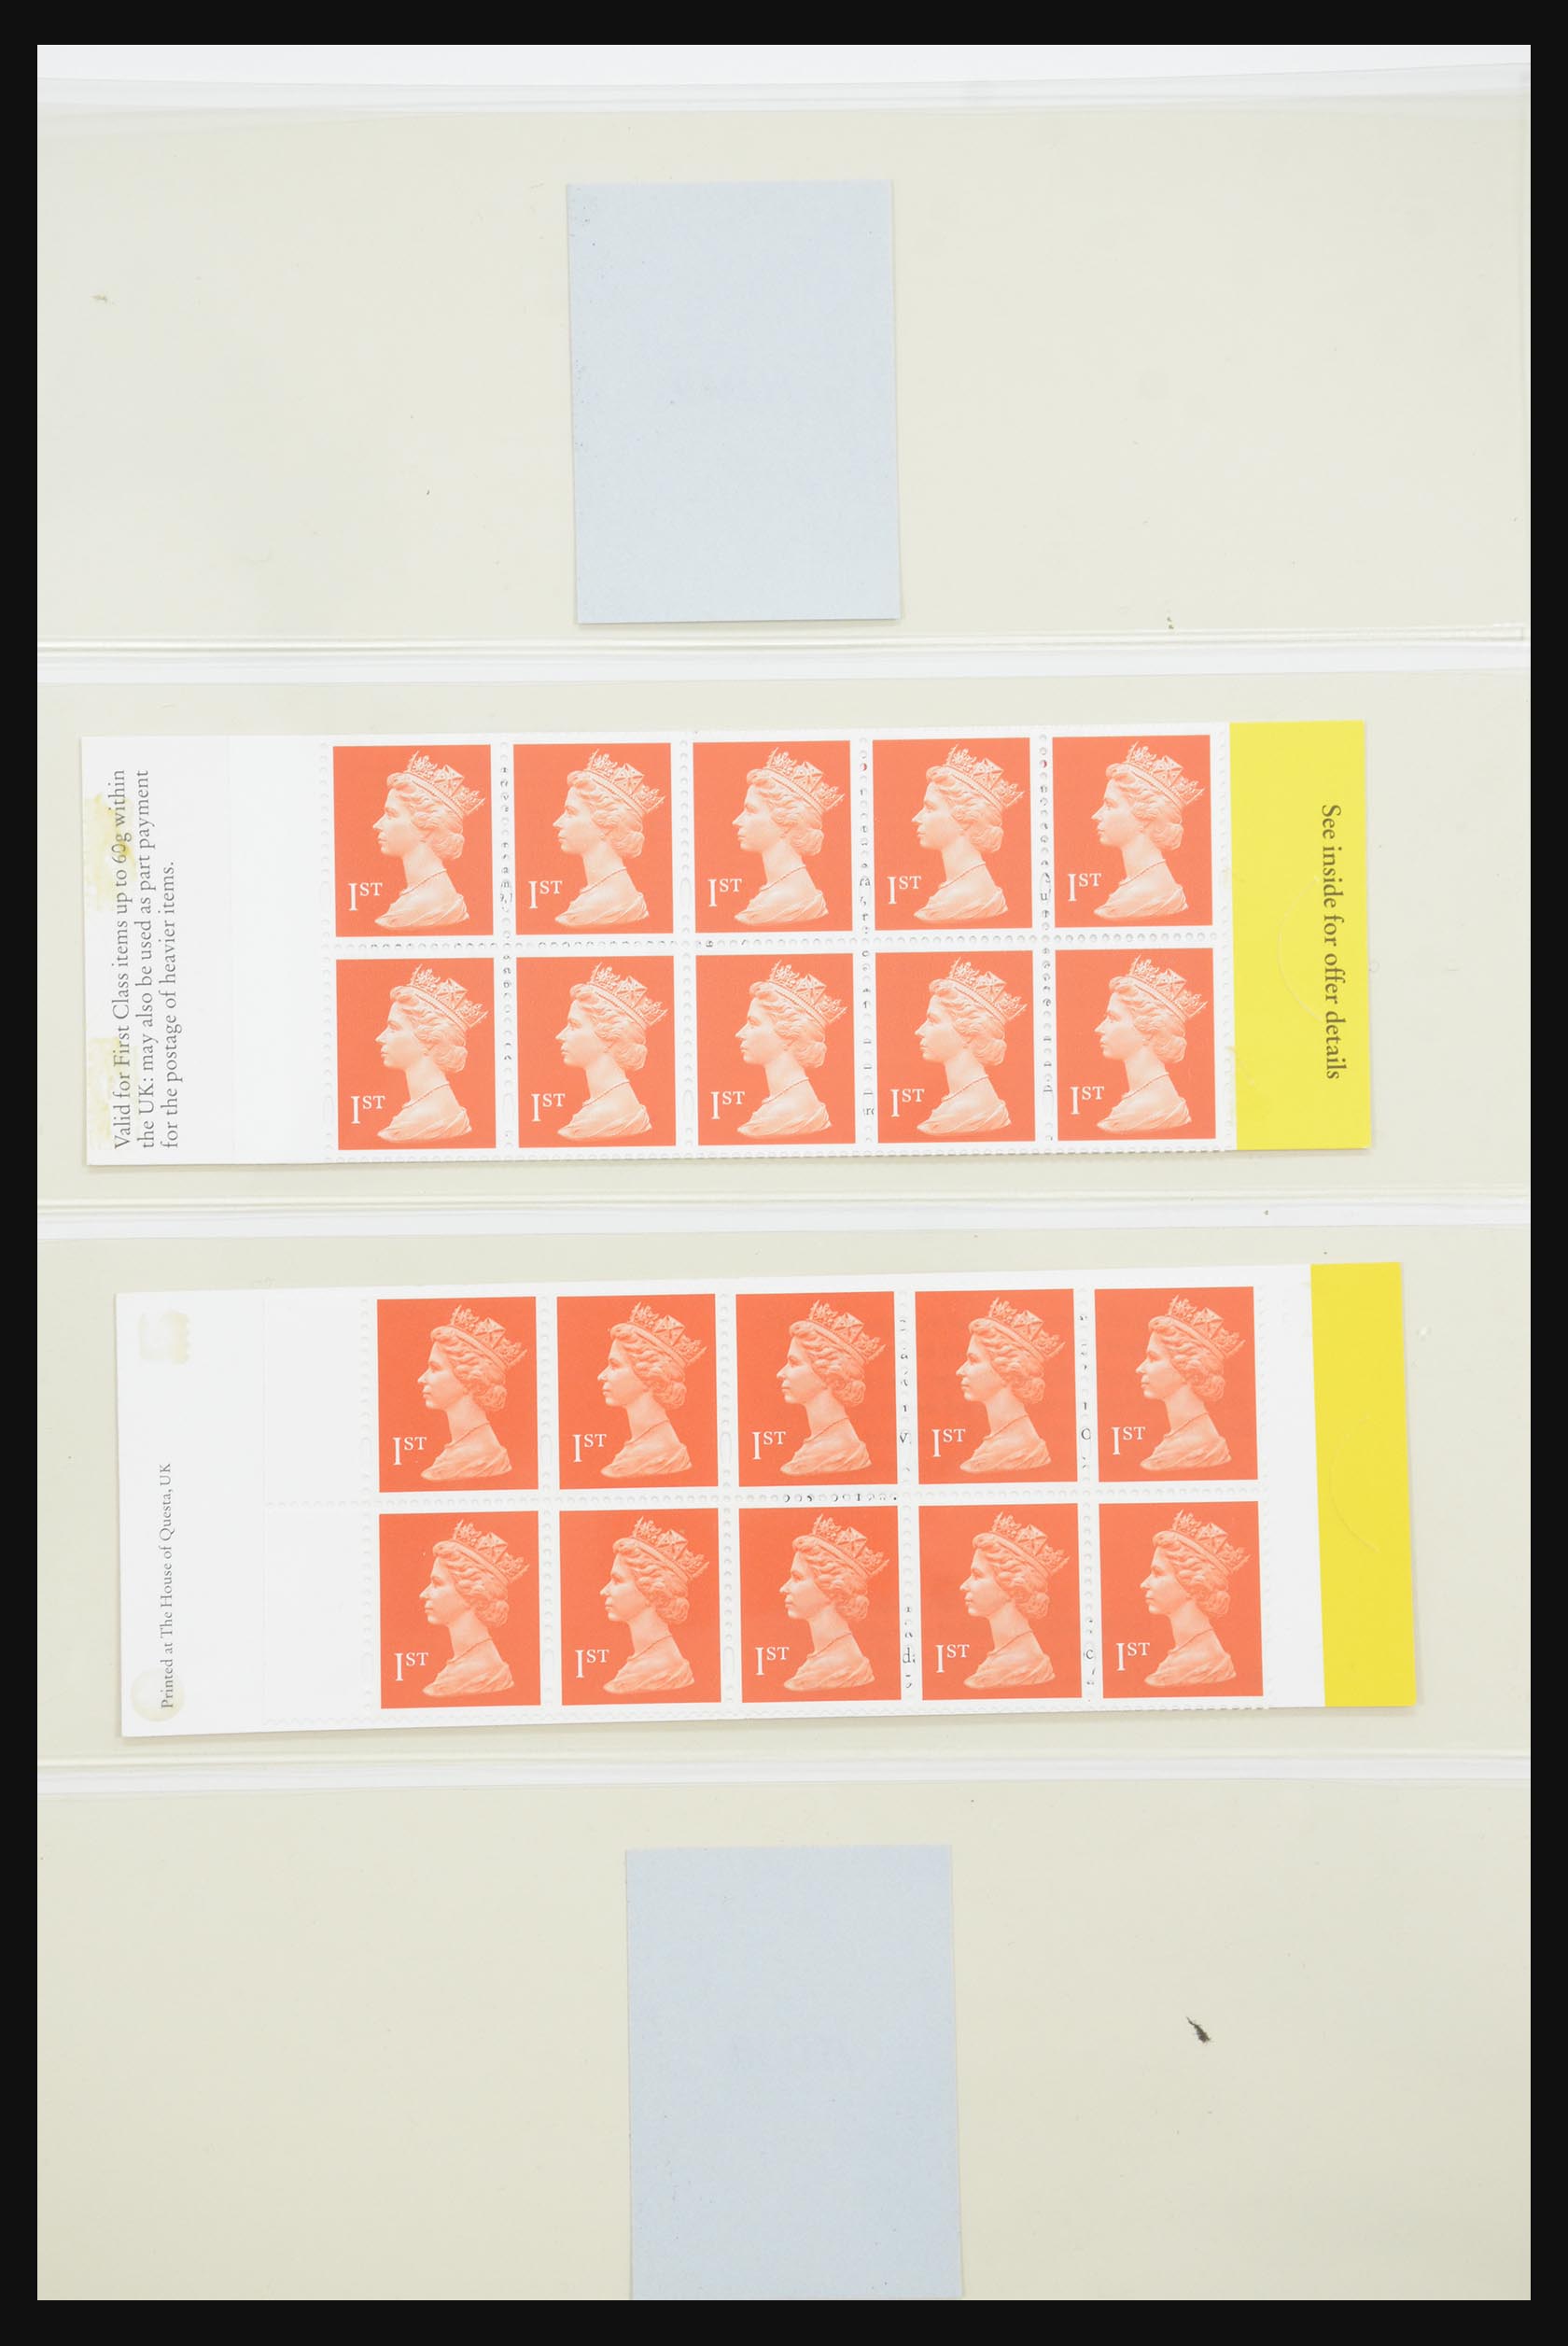 31960 172 - 31960 Great Britain stampbooklets 1989-2000.